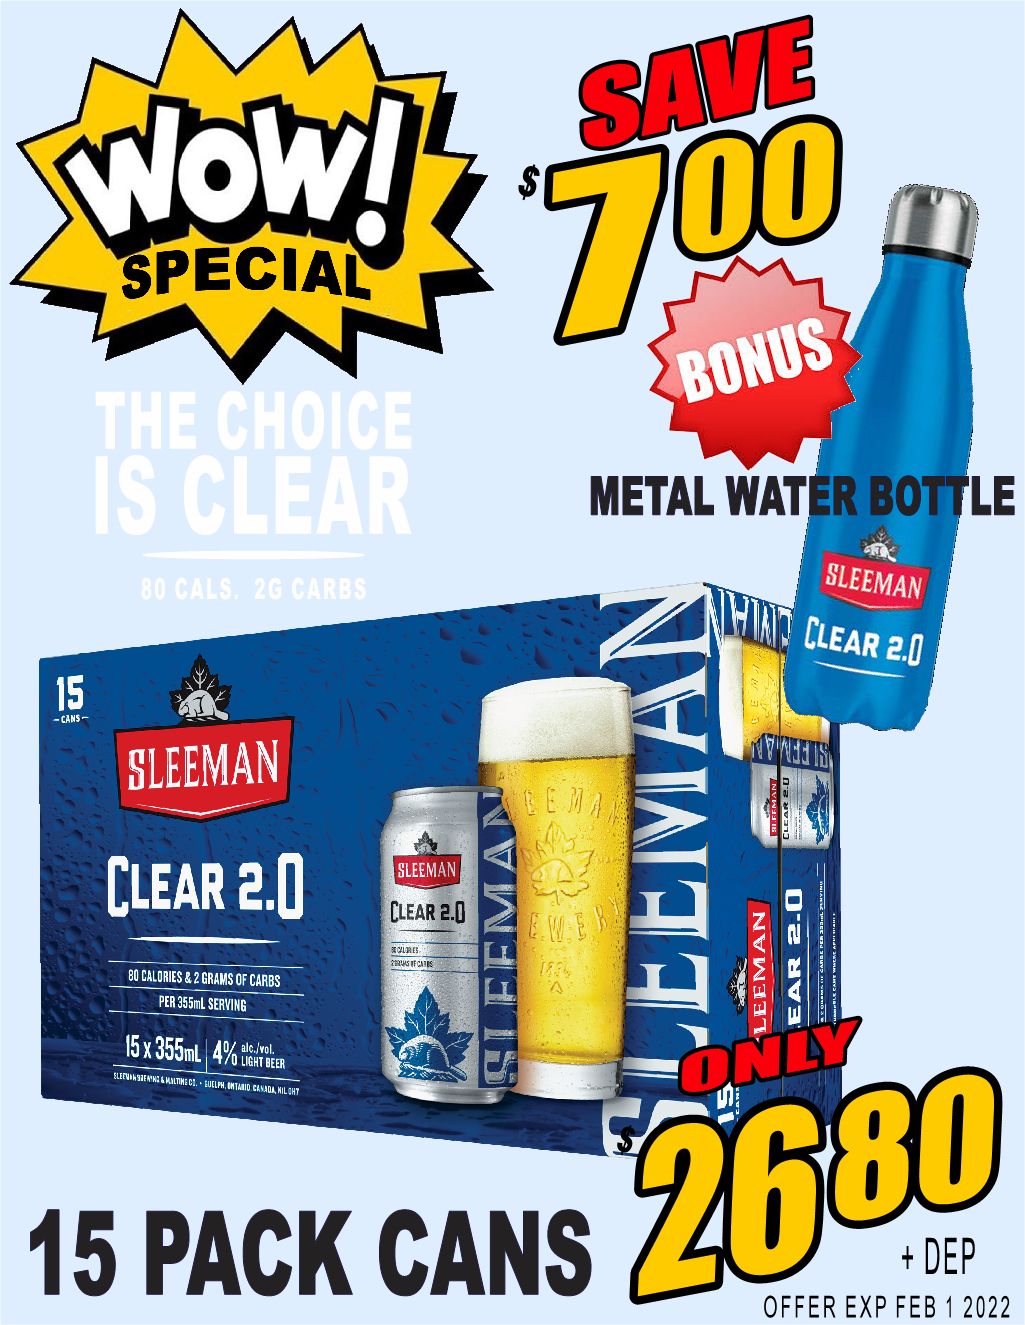 Sleeman clear 2.0% - 15x355ml - Save $7.00!!! WOW!!